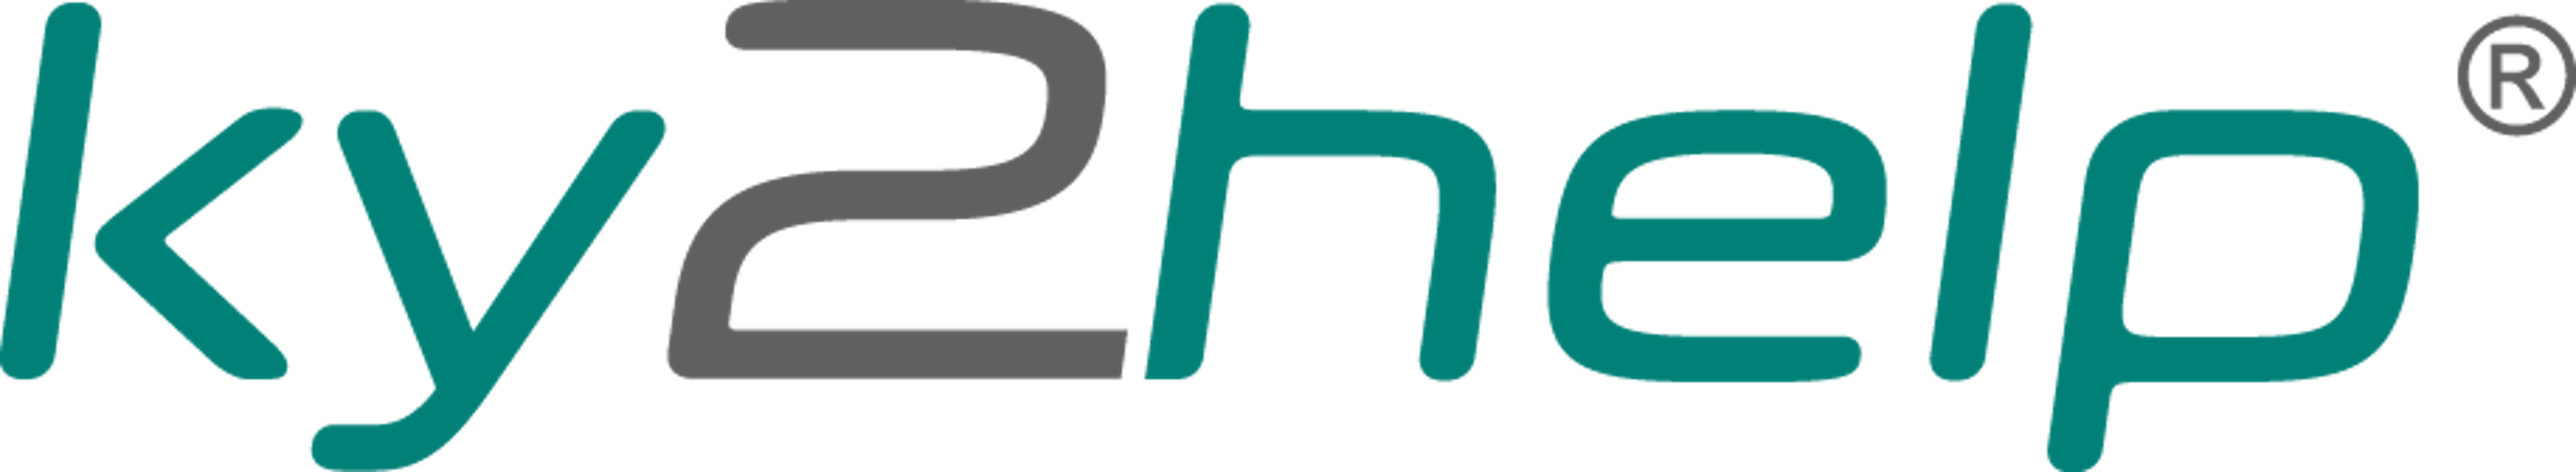 ky2help Logo